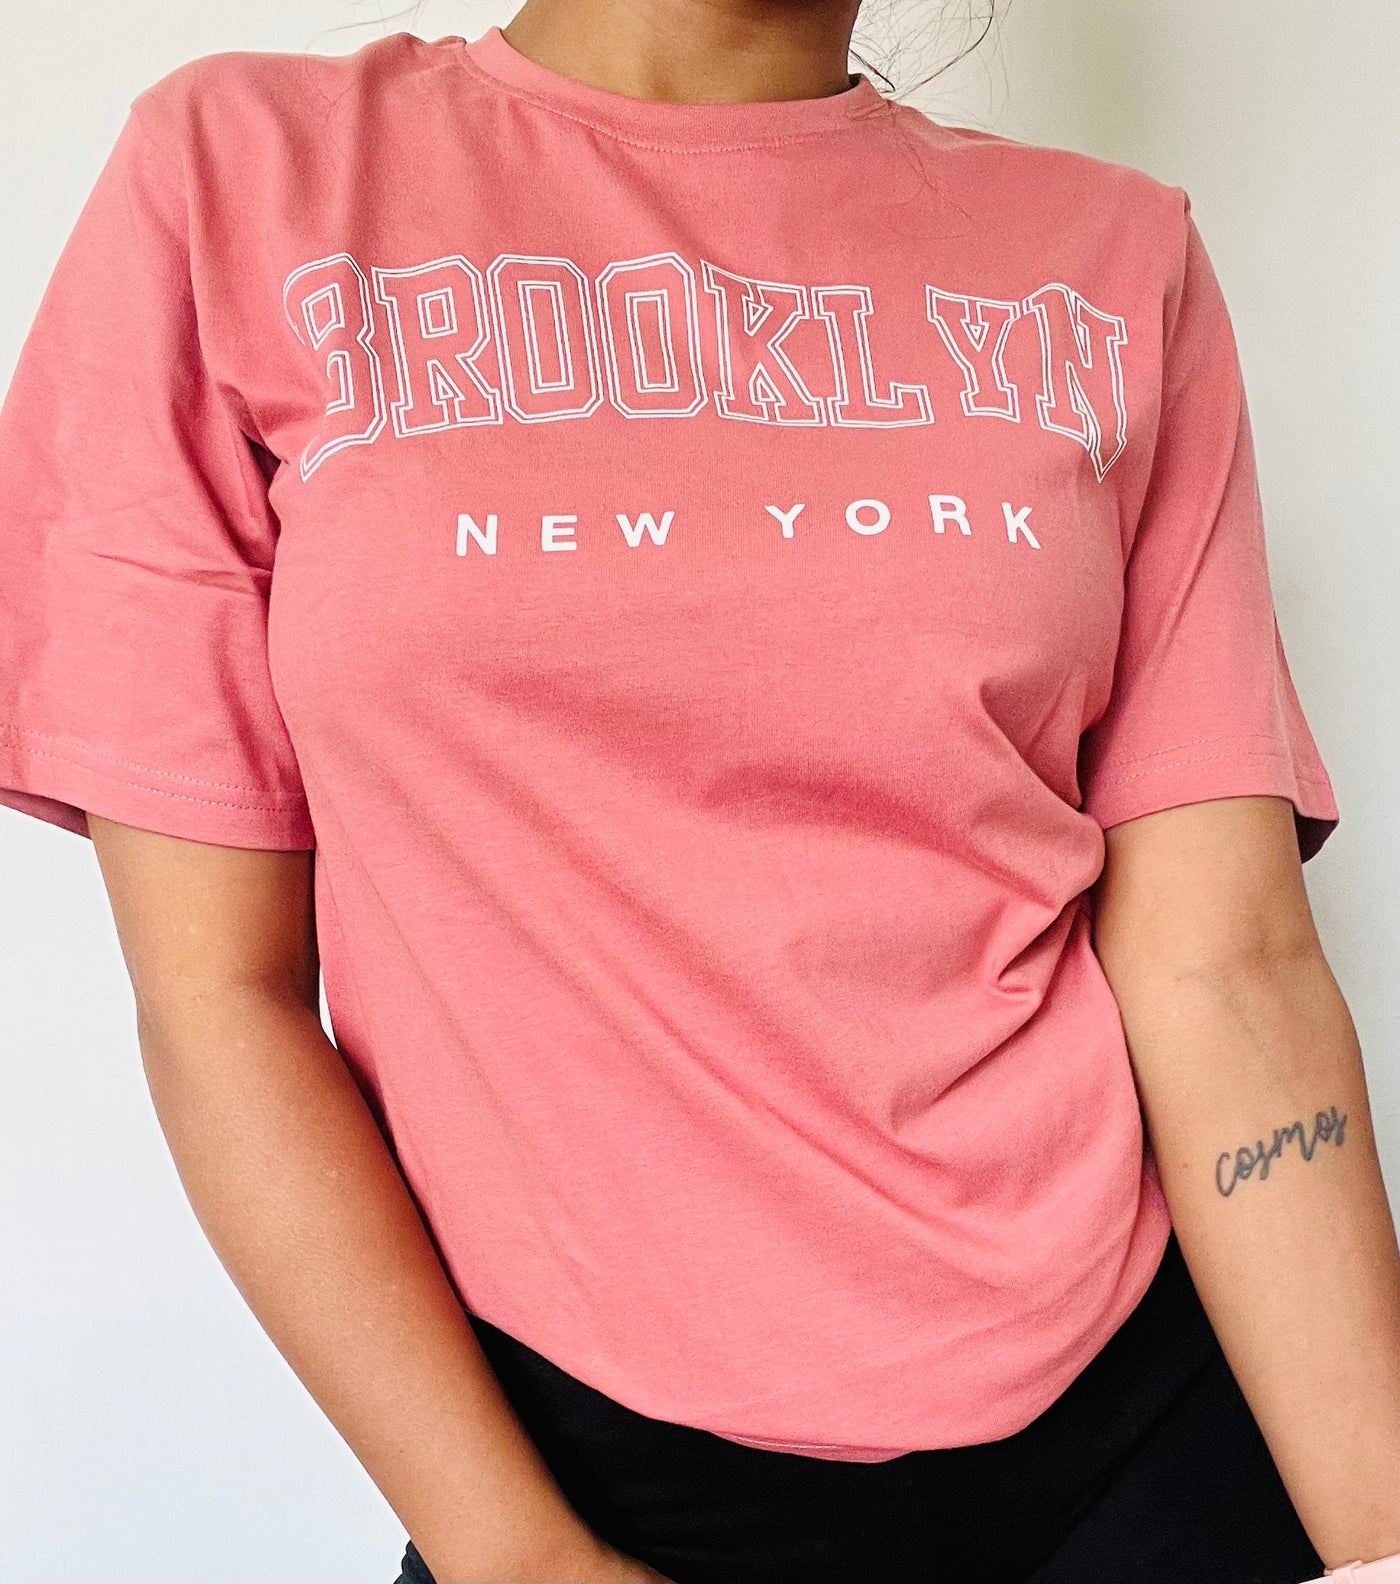 Brooklyn Women's Oversized T-Shirt